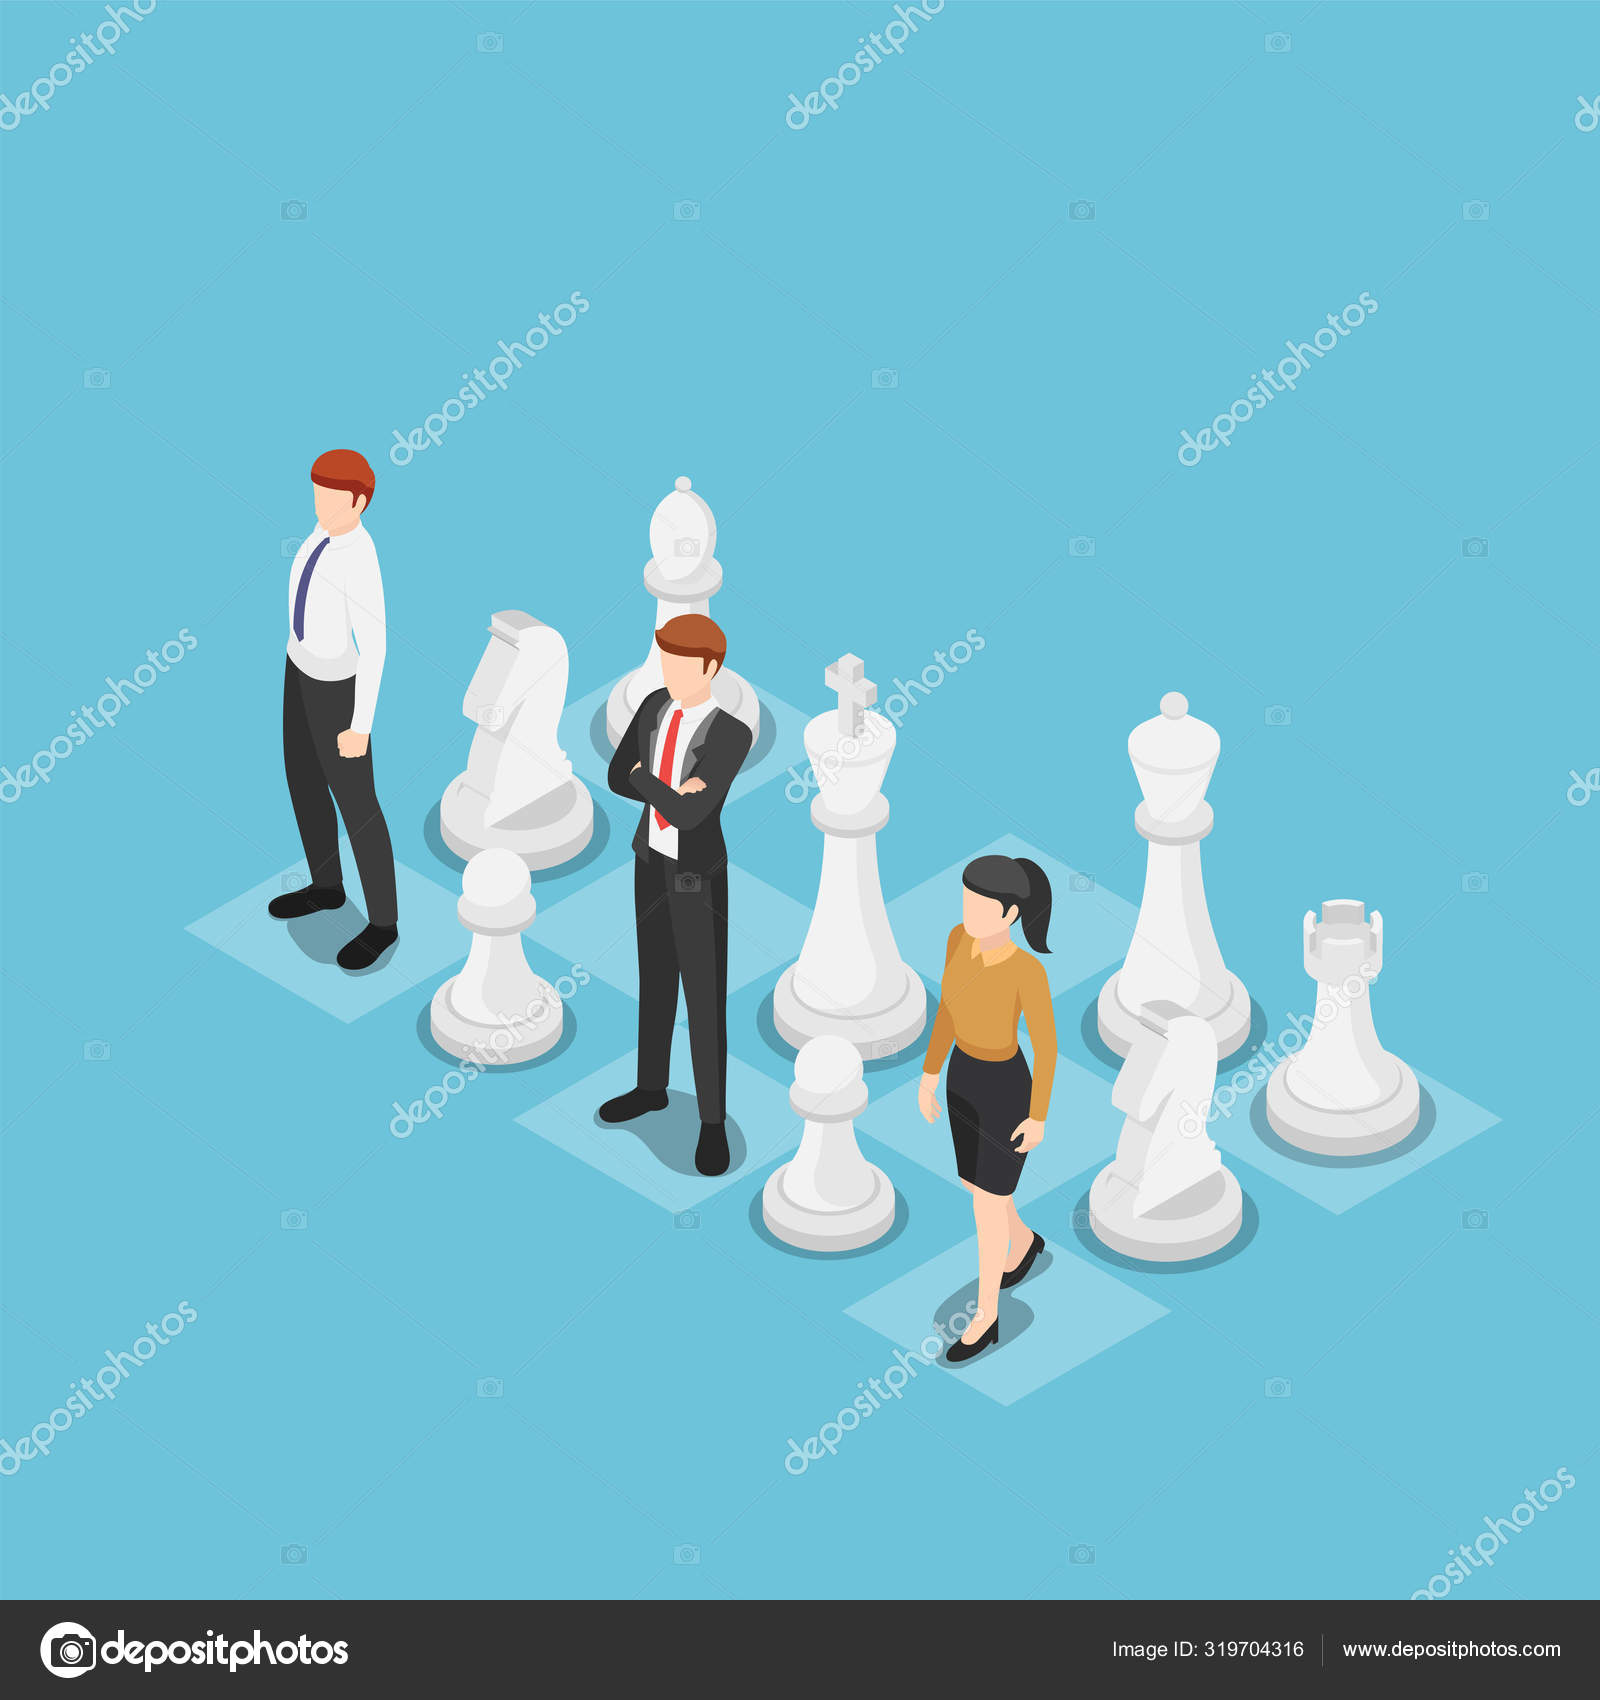 vetor isométrico do ícone do movimento do cavalo. xadrez online